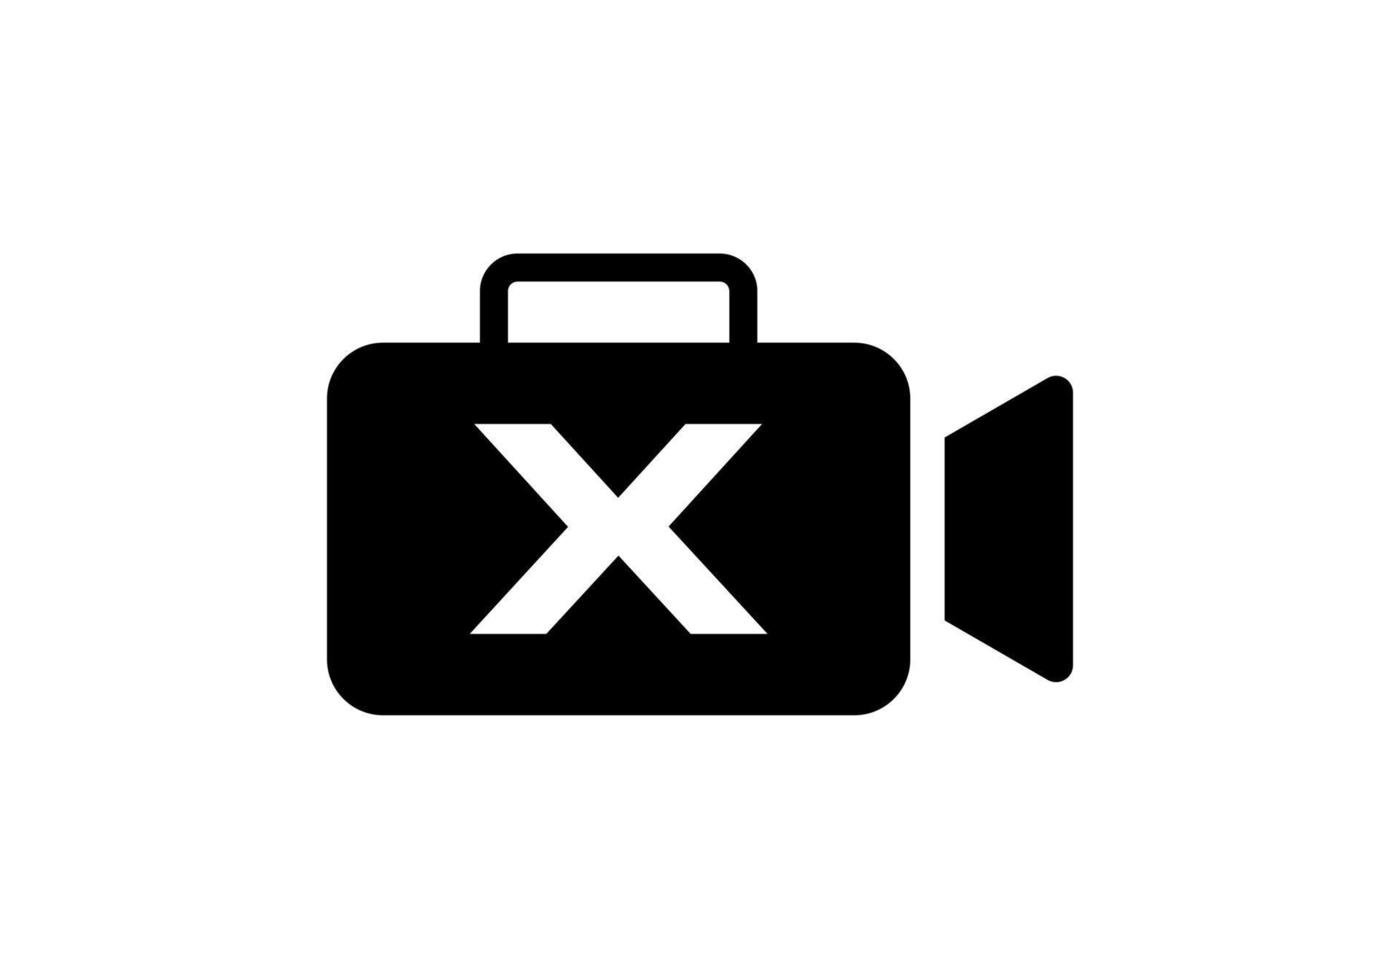 Letter X Film Video Camera Logo Design Cinema Film and Videography Sign vector